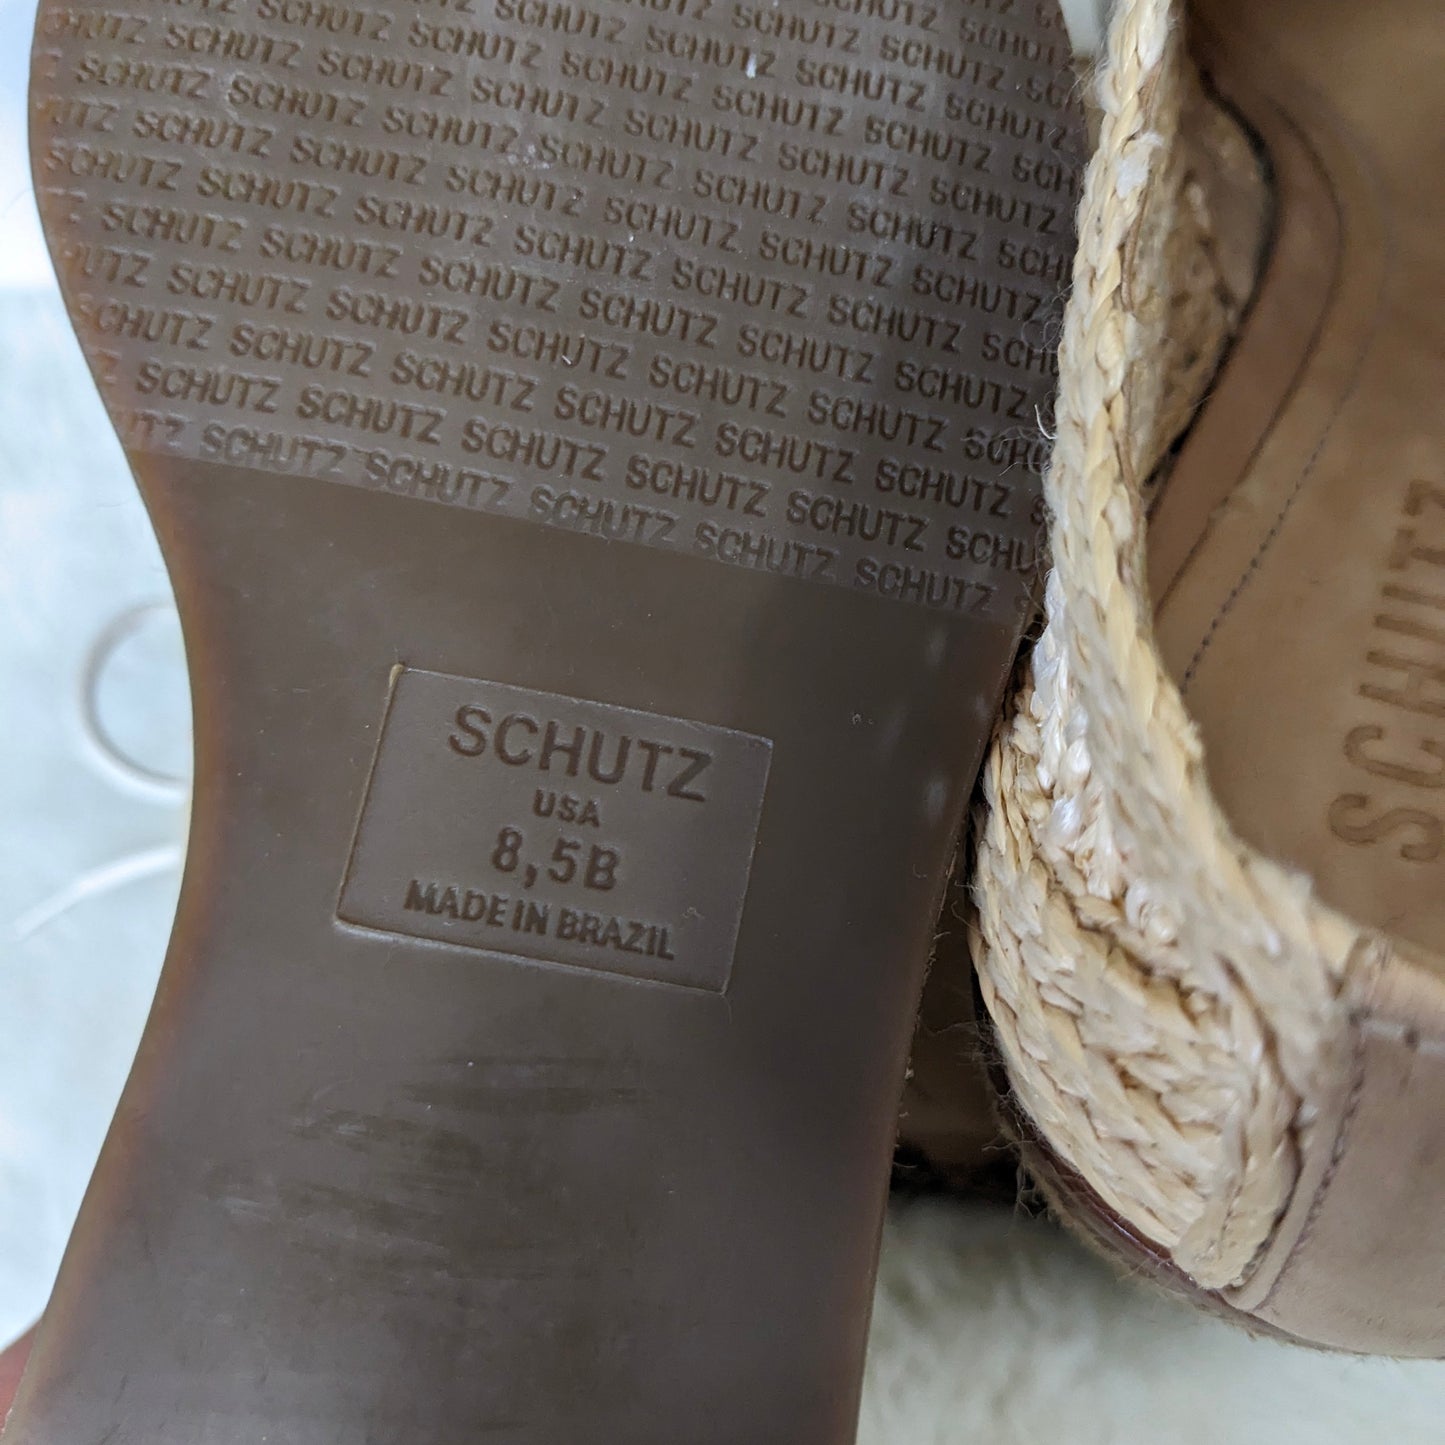 Schultz Woven Straw Platform Loafers Sz 8.5